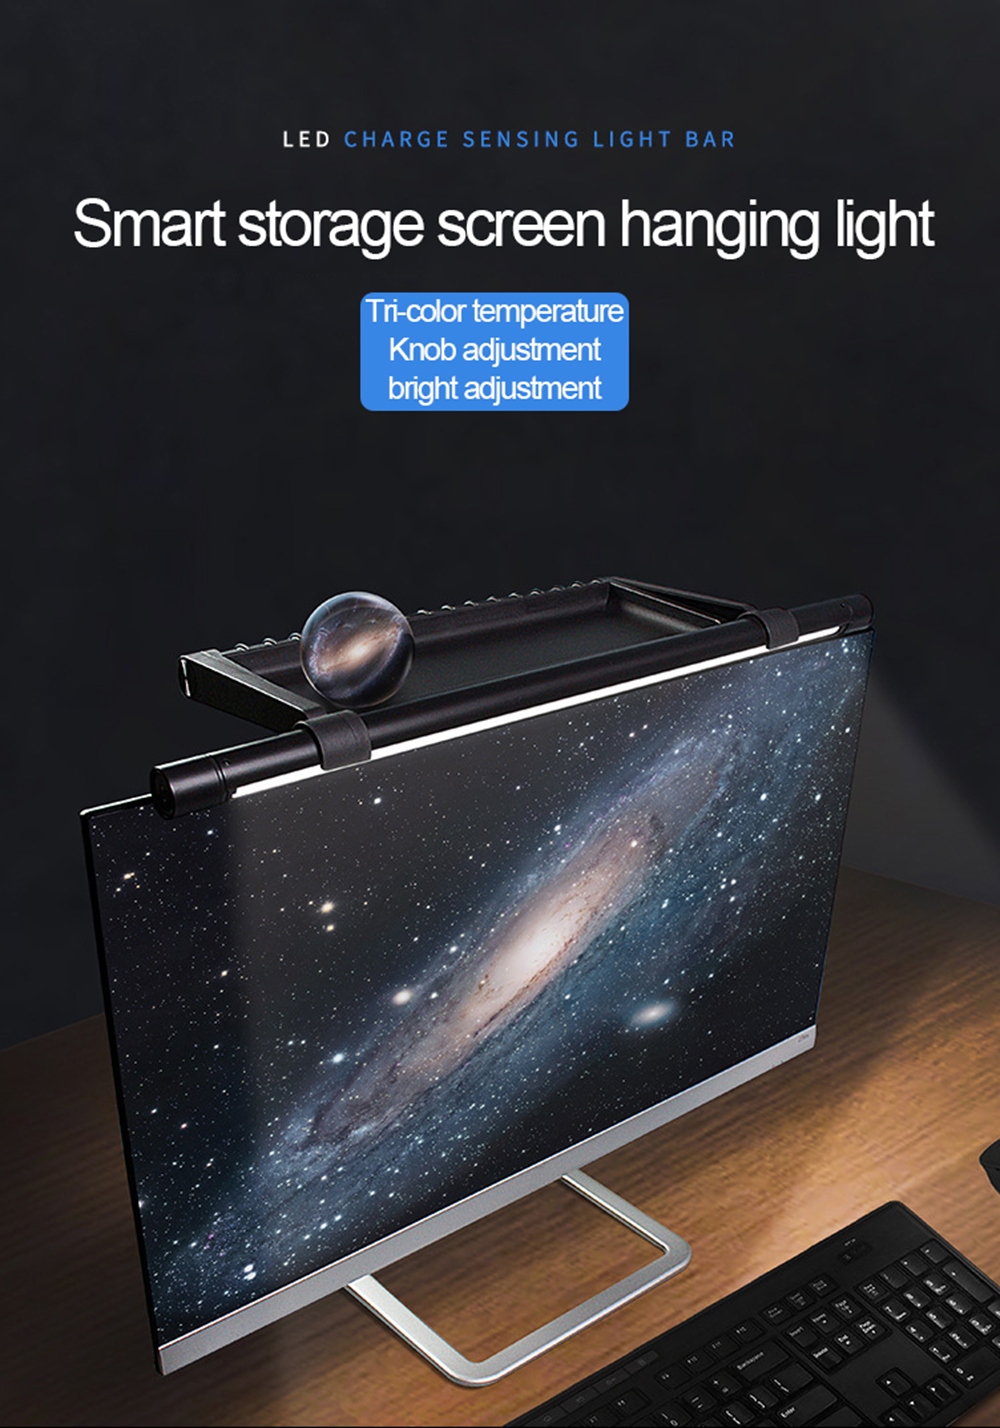 Opstar-USB-Infinite-Dimming-Smart-Storage-Screen-LED-Desk-Reading-Lamp-Computer-Screen-Hanging-Light-1804173-1